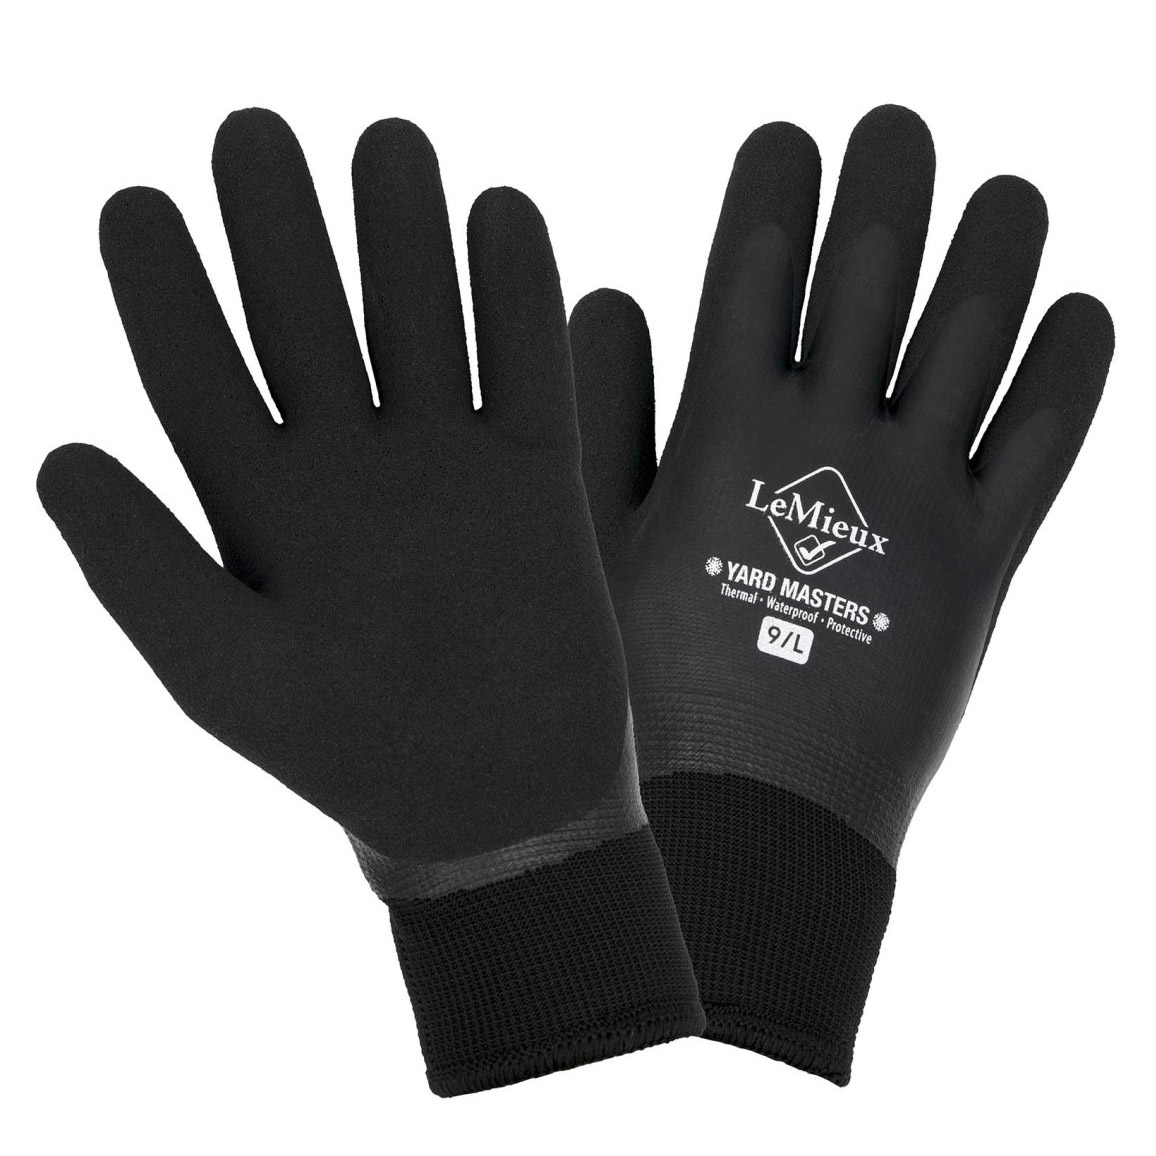 LeMieux Thermal Winter Work Gloves - Black